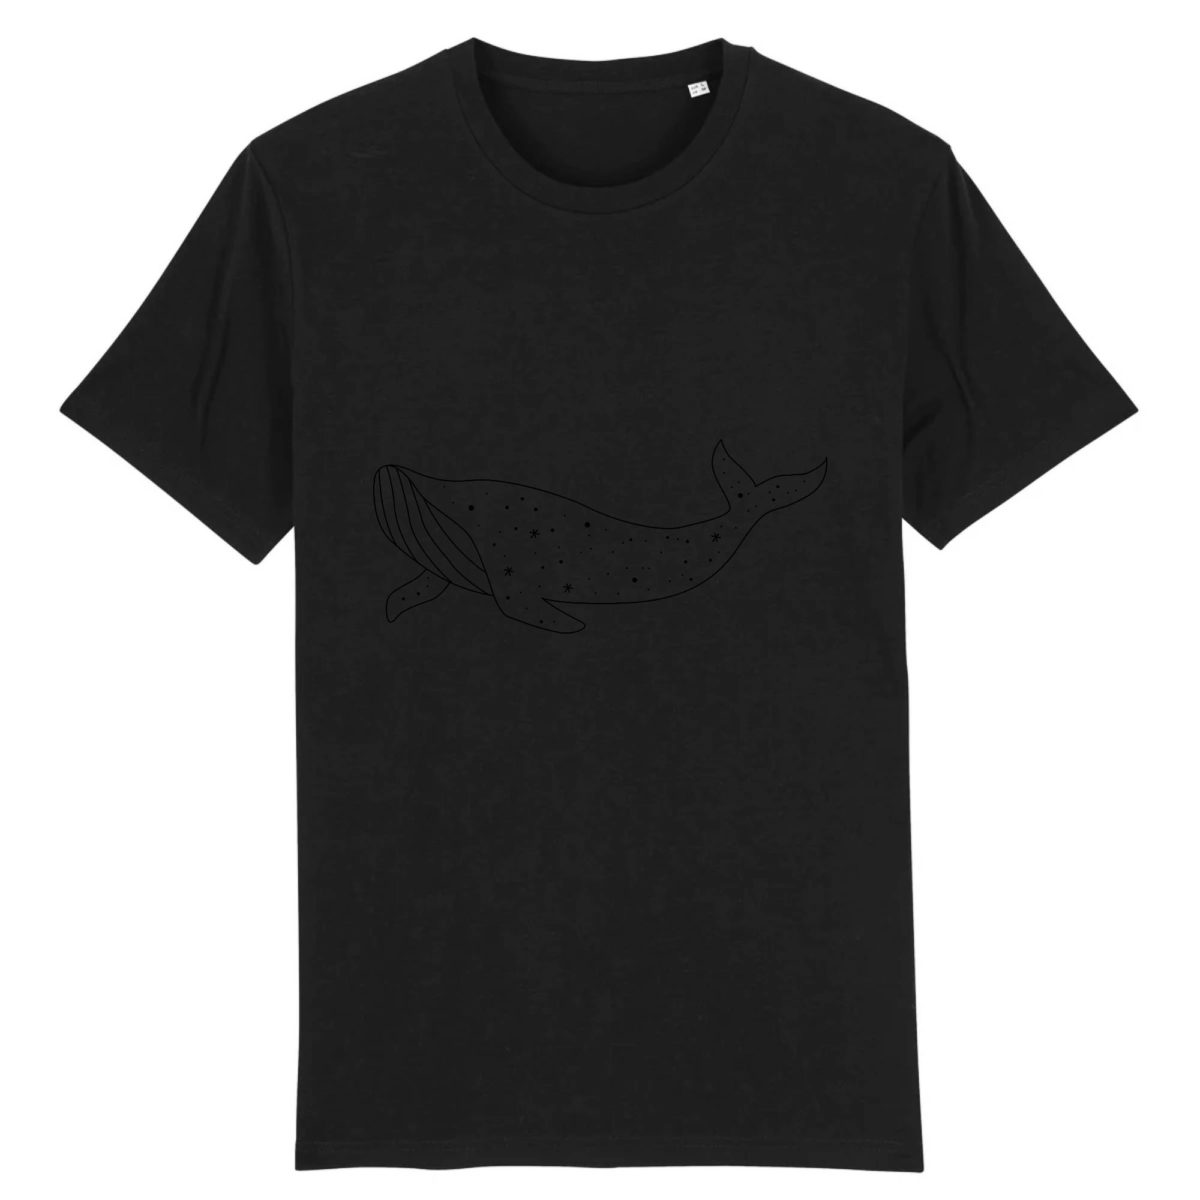 La baleine T-shirt Unisexe - Coton BIO